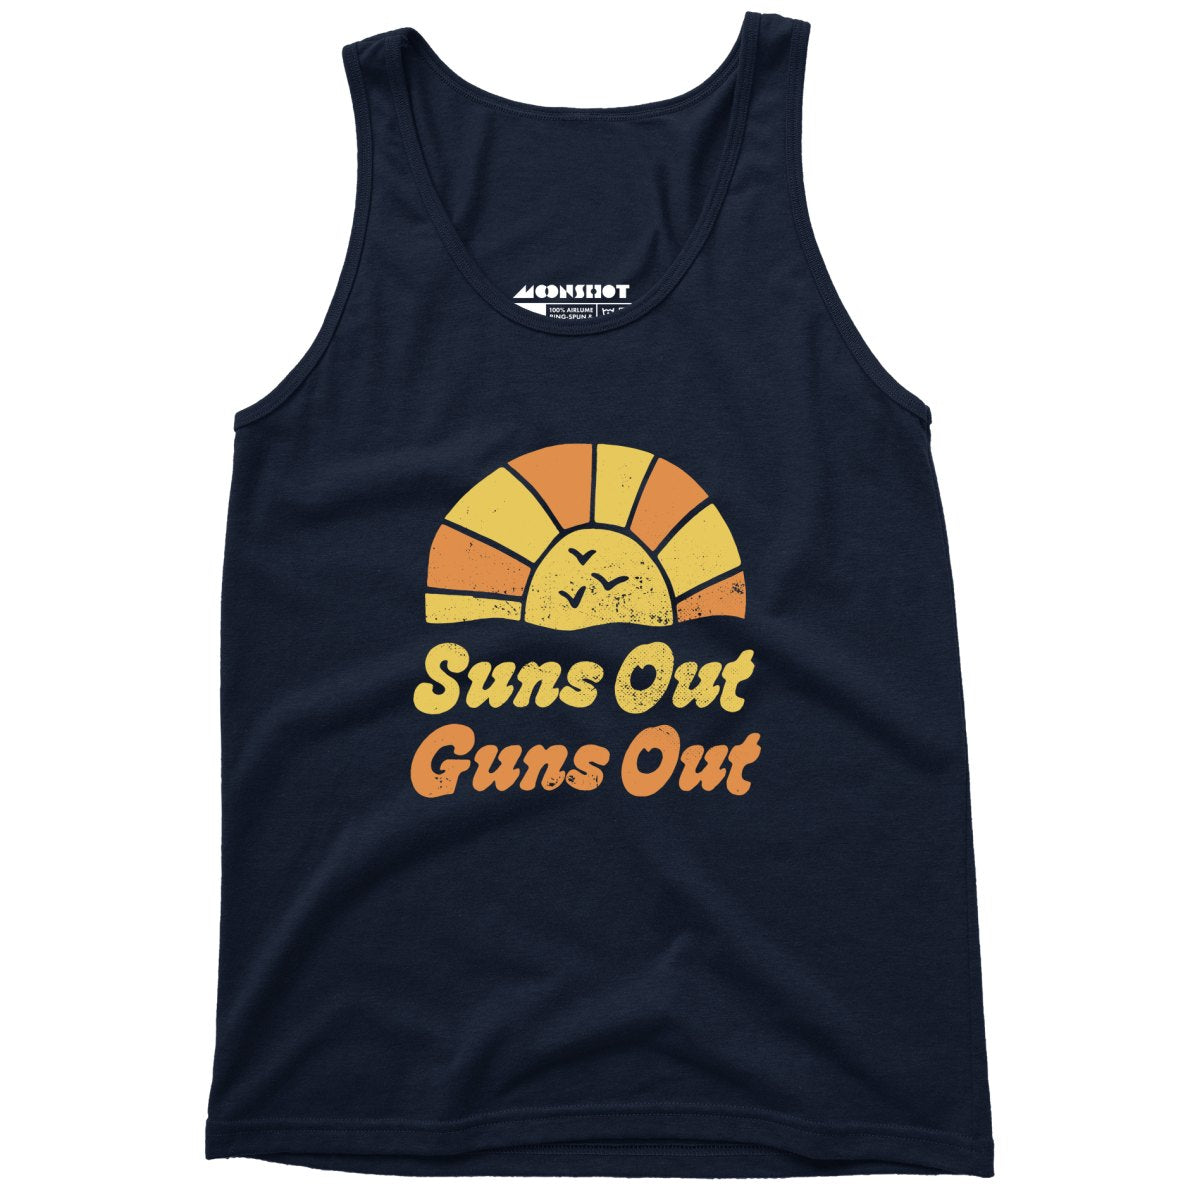 Suns Out Guns Out - Unisex Tank Top